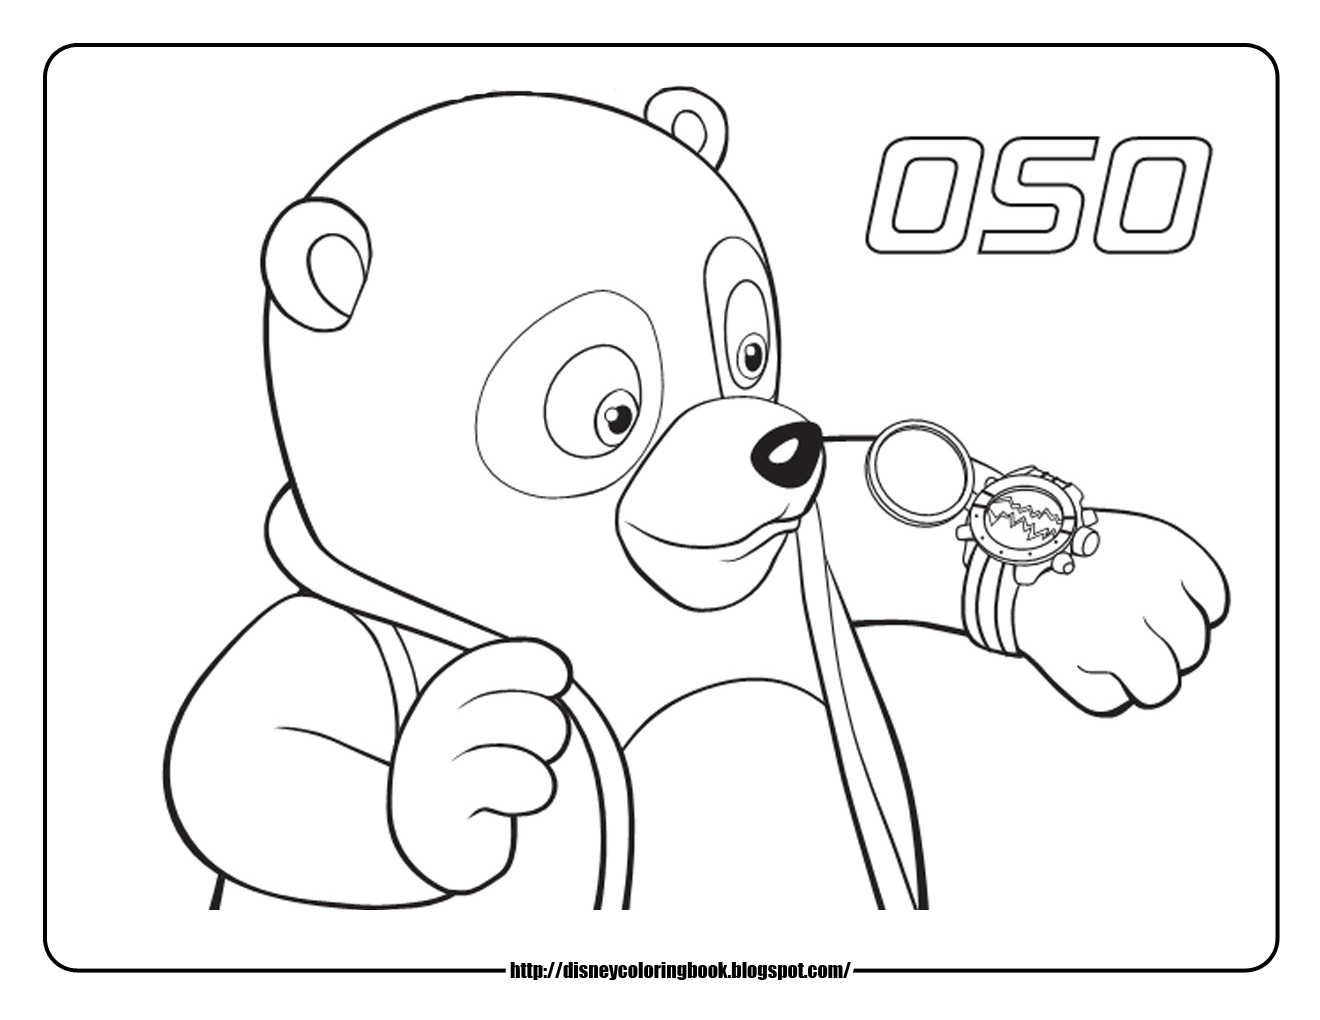  Disney coloring pages | Panda